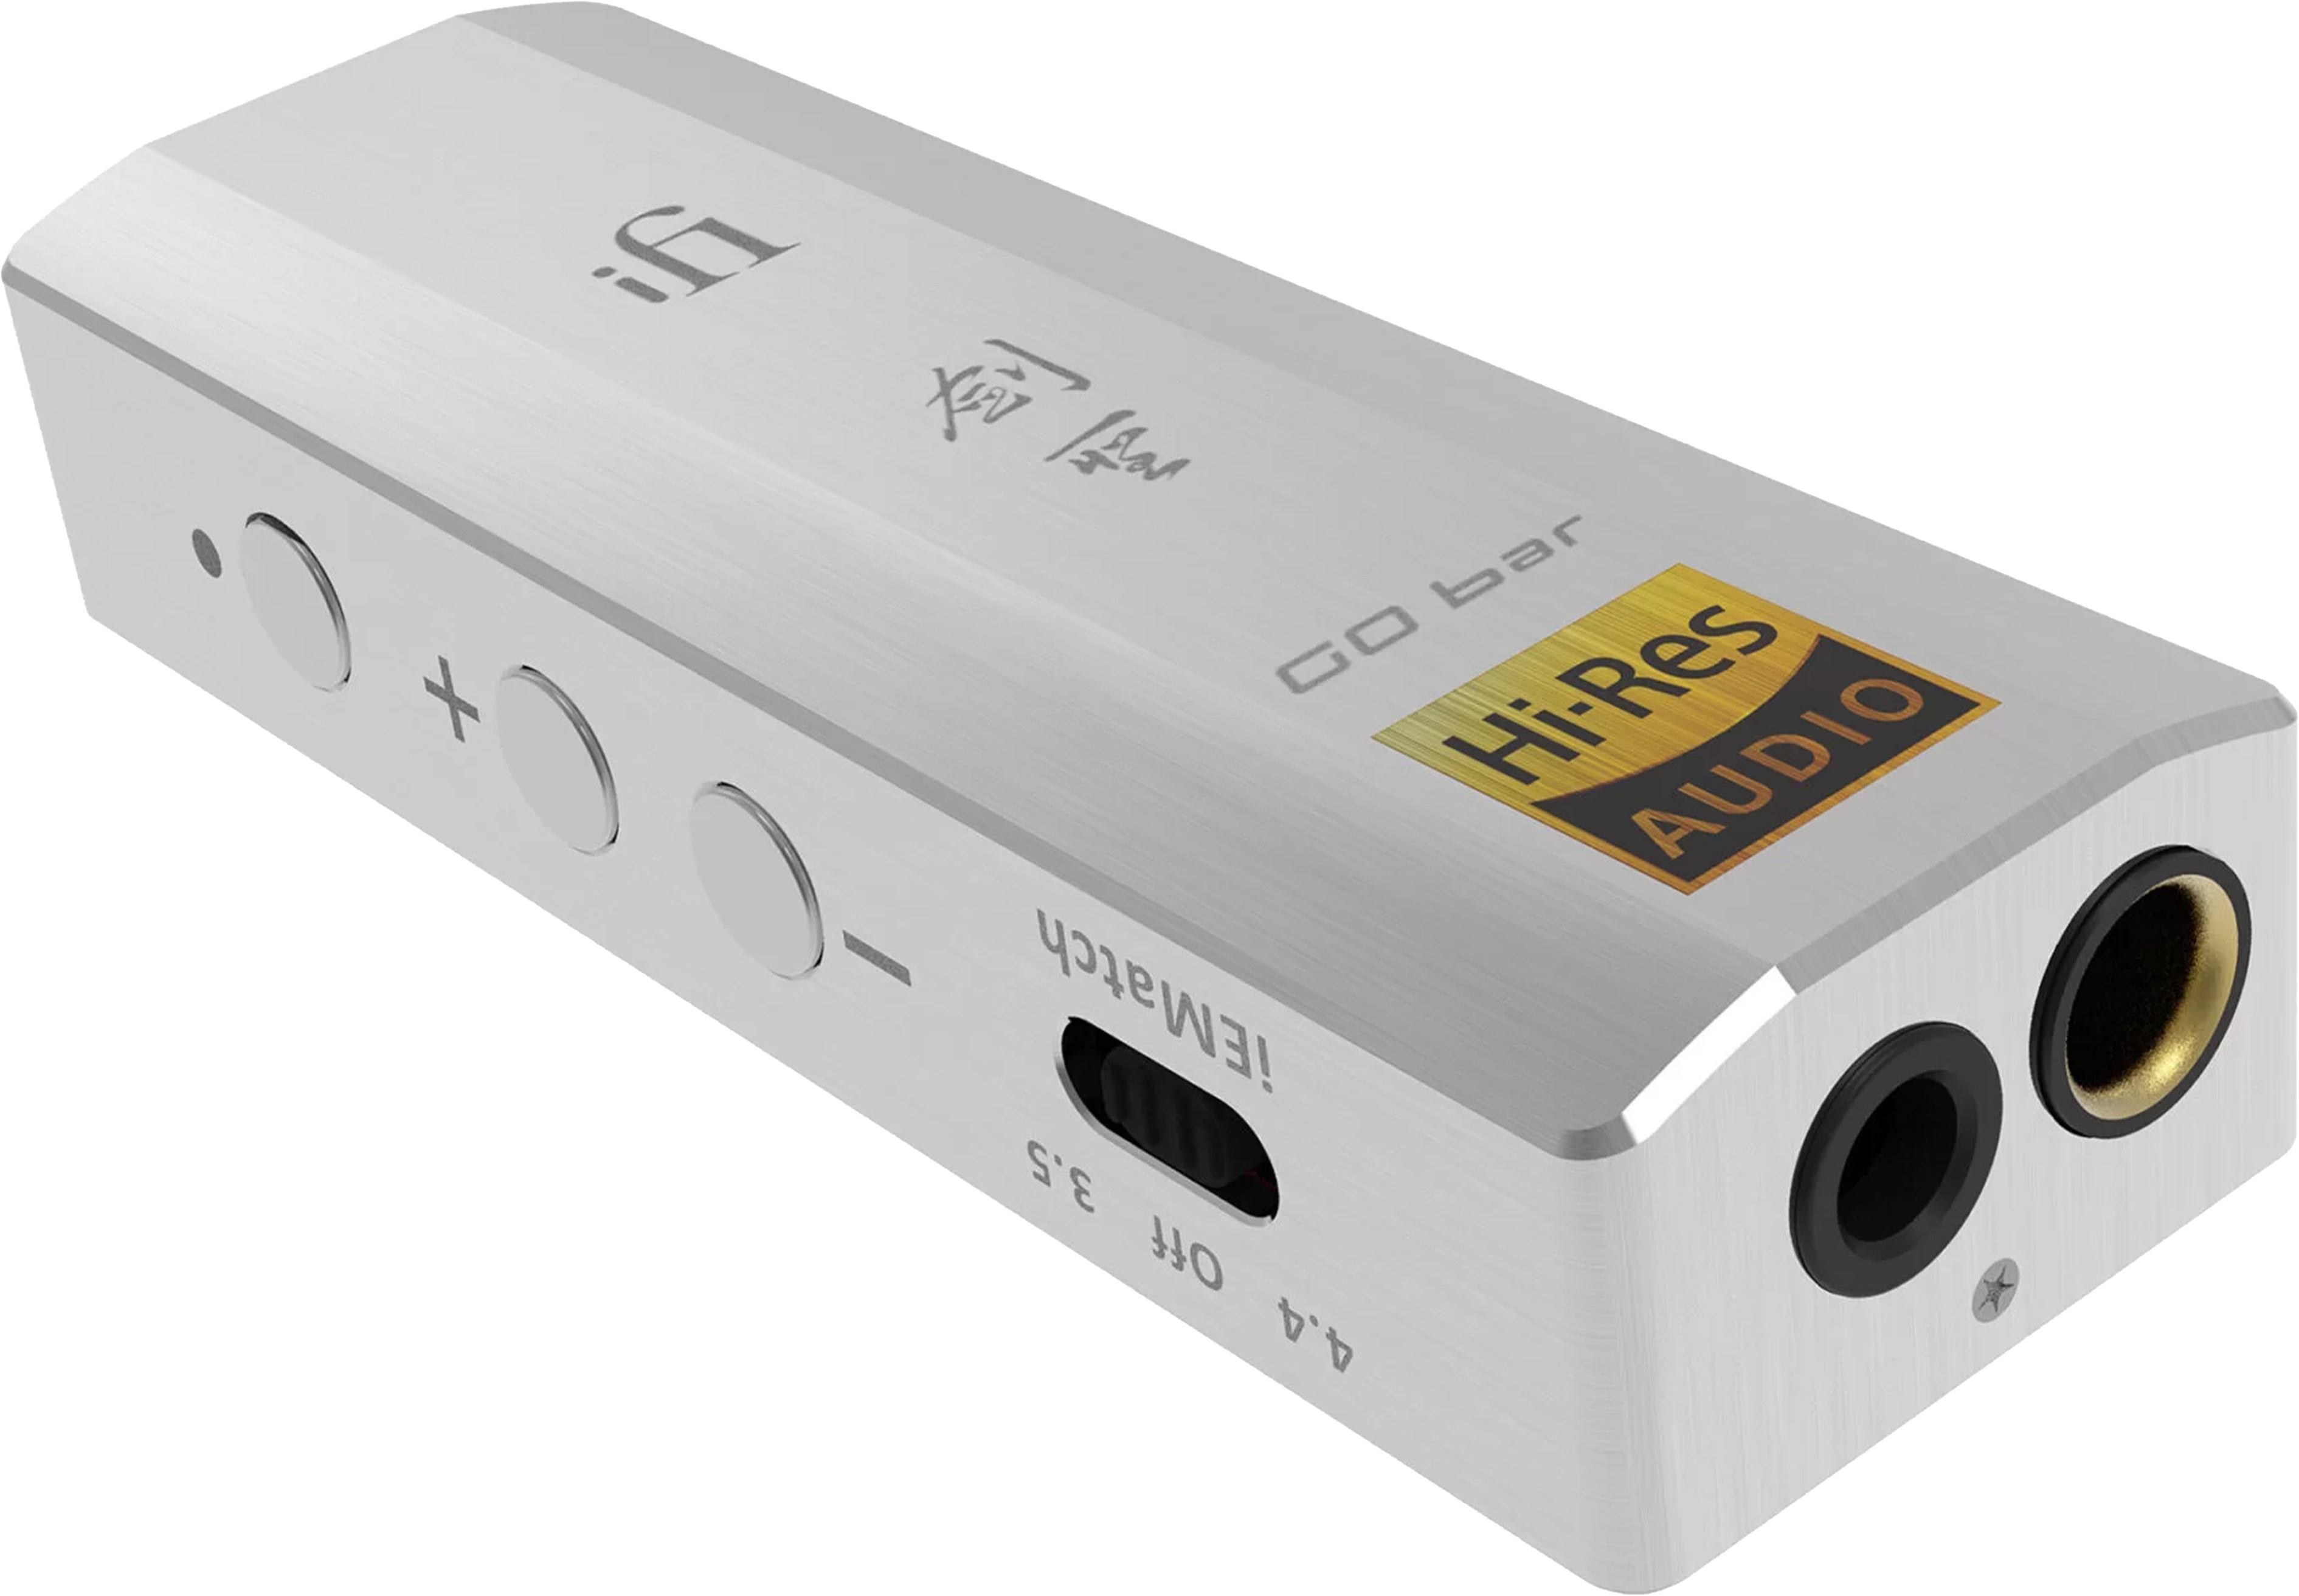 iFi Audio GO Bar Kensei Portable USB DAC Headphone Amplifier XMOS 32bit 384kHz DSD256 MQA K2HD